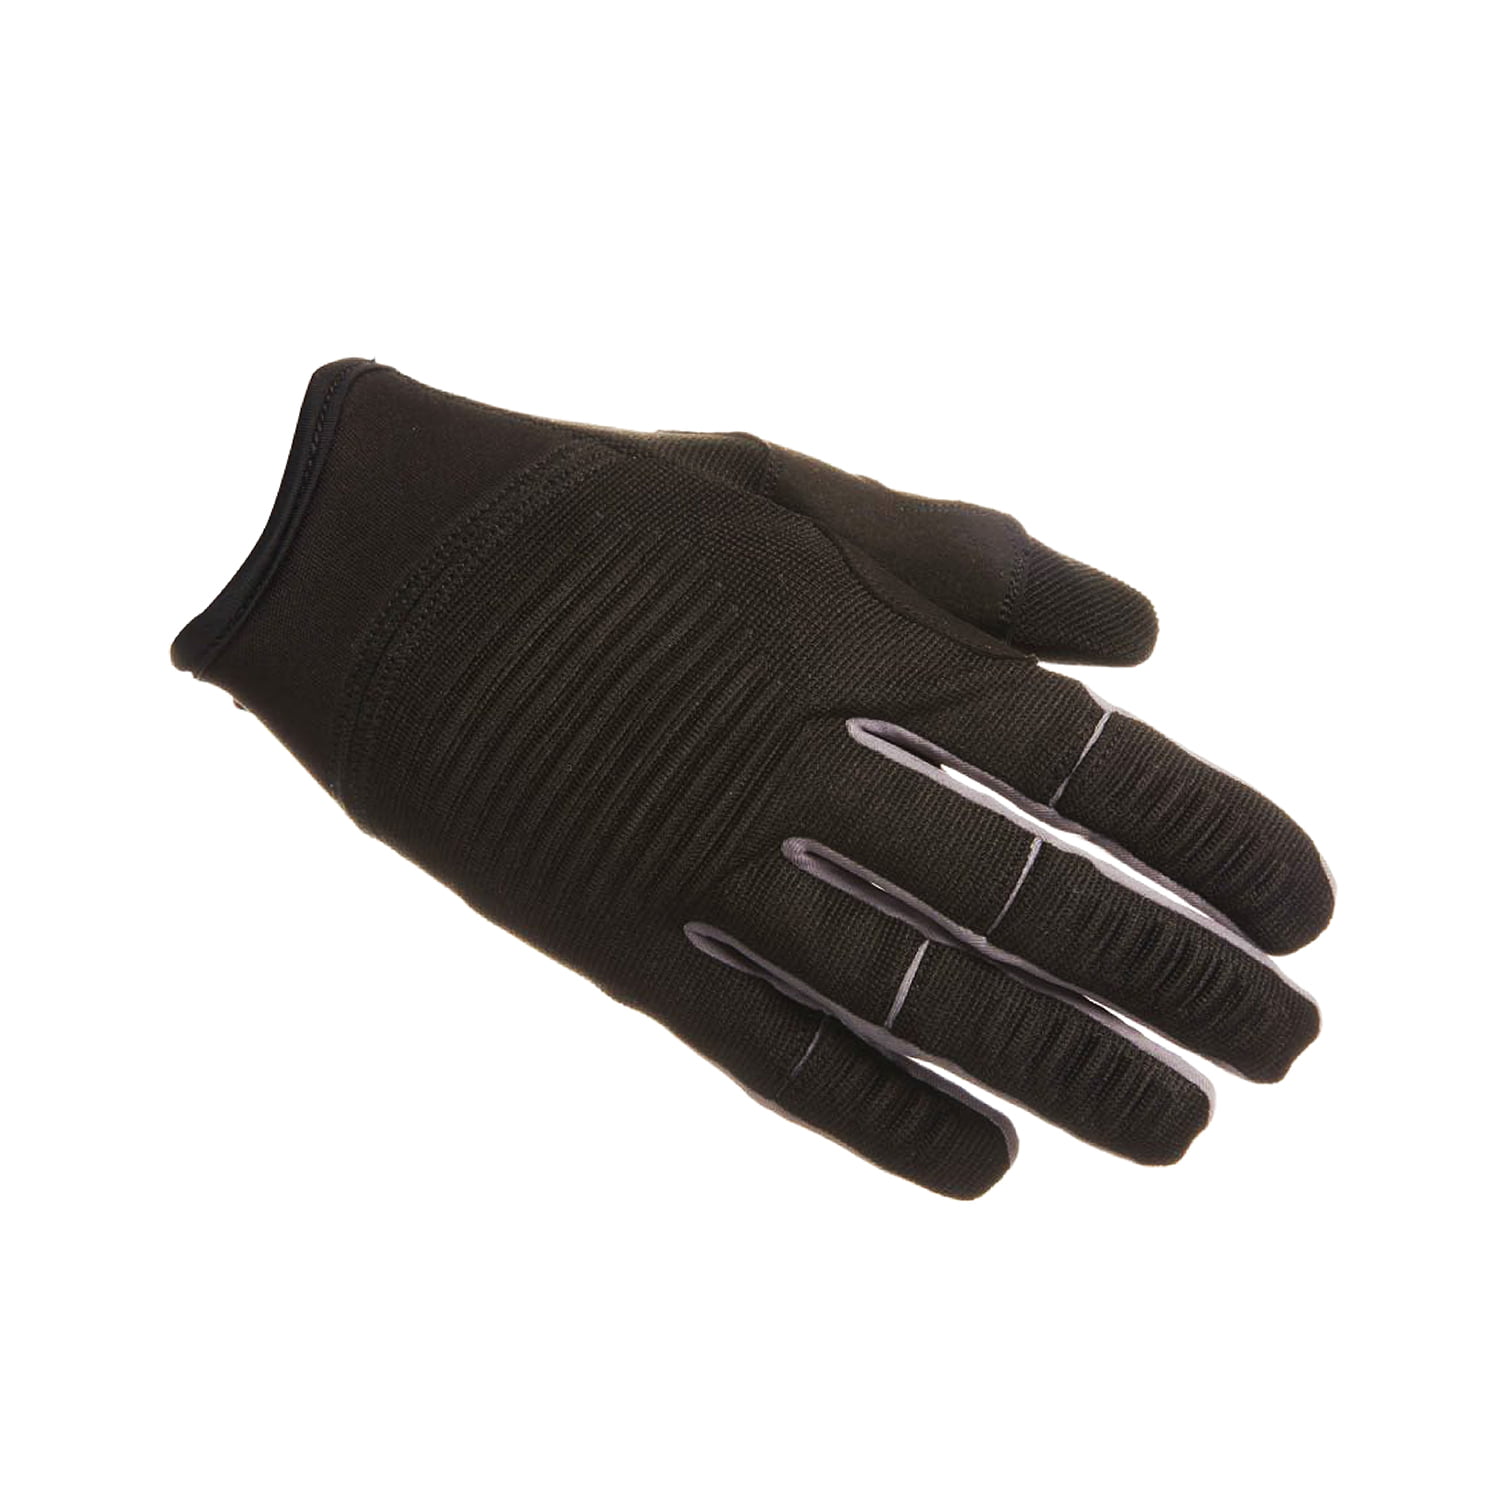 Black Outdoor Rock Climbing Hiking Anti-slip Palm Grips Full Finger Gloves 